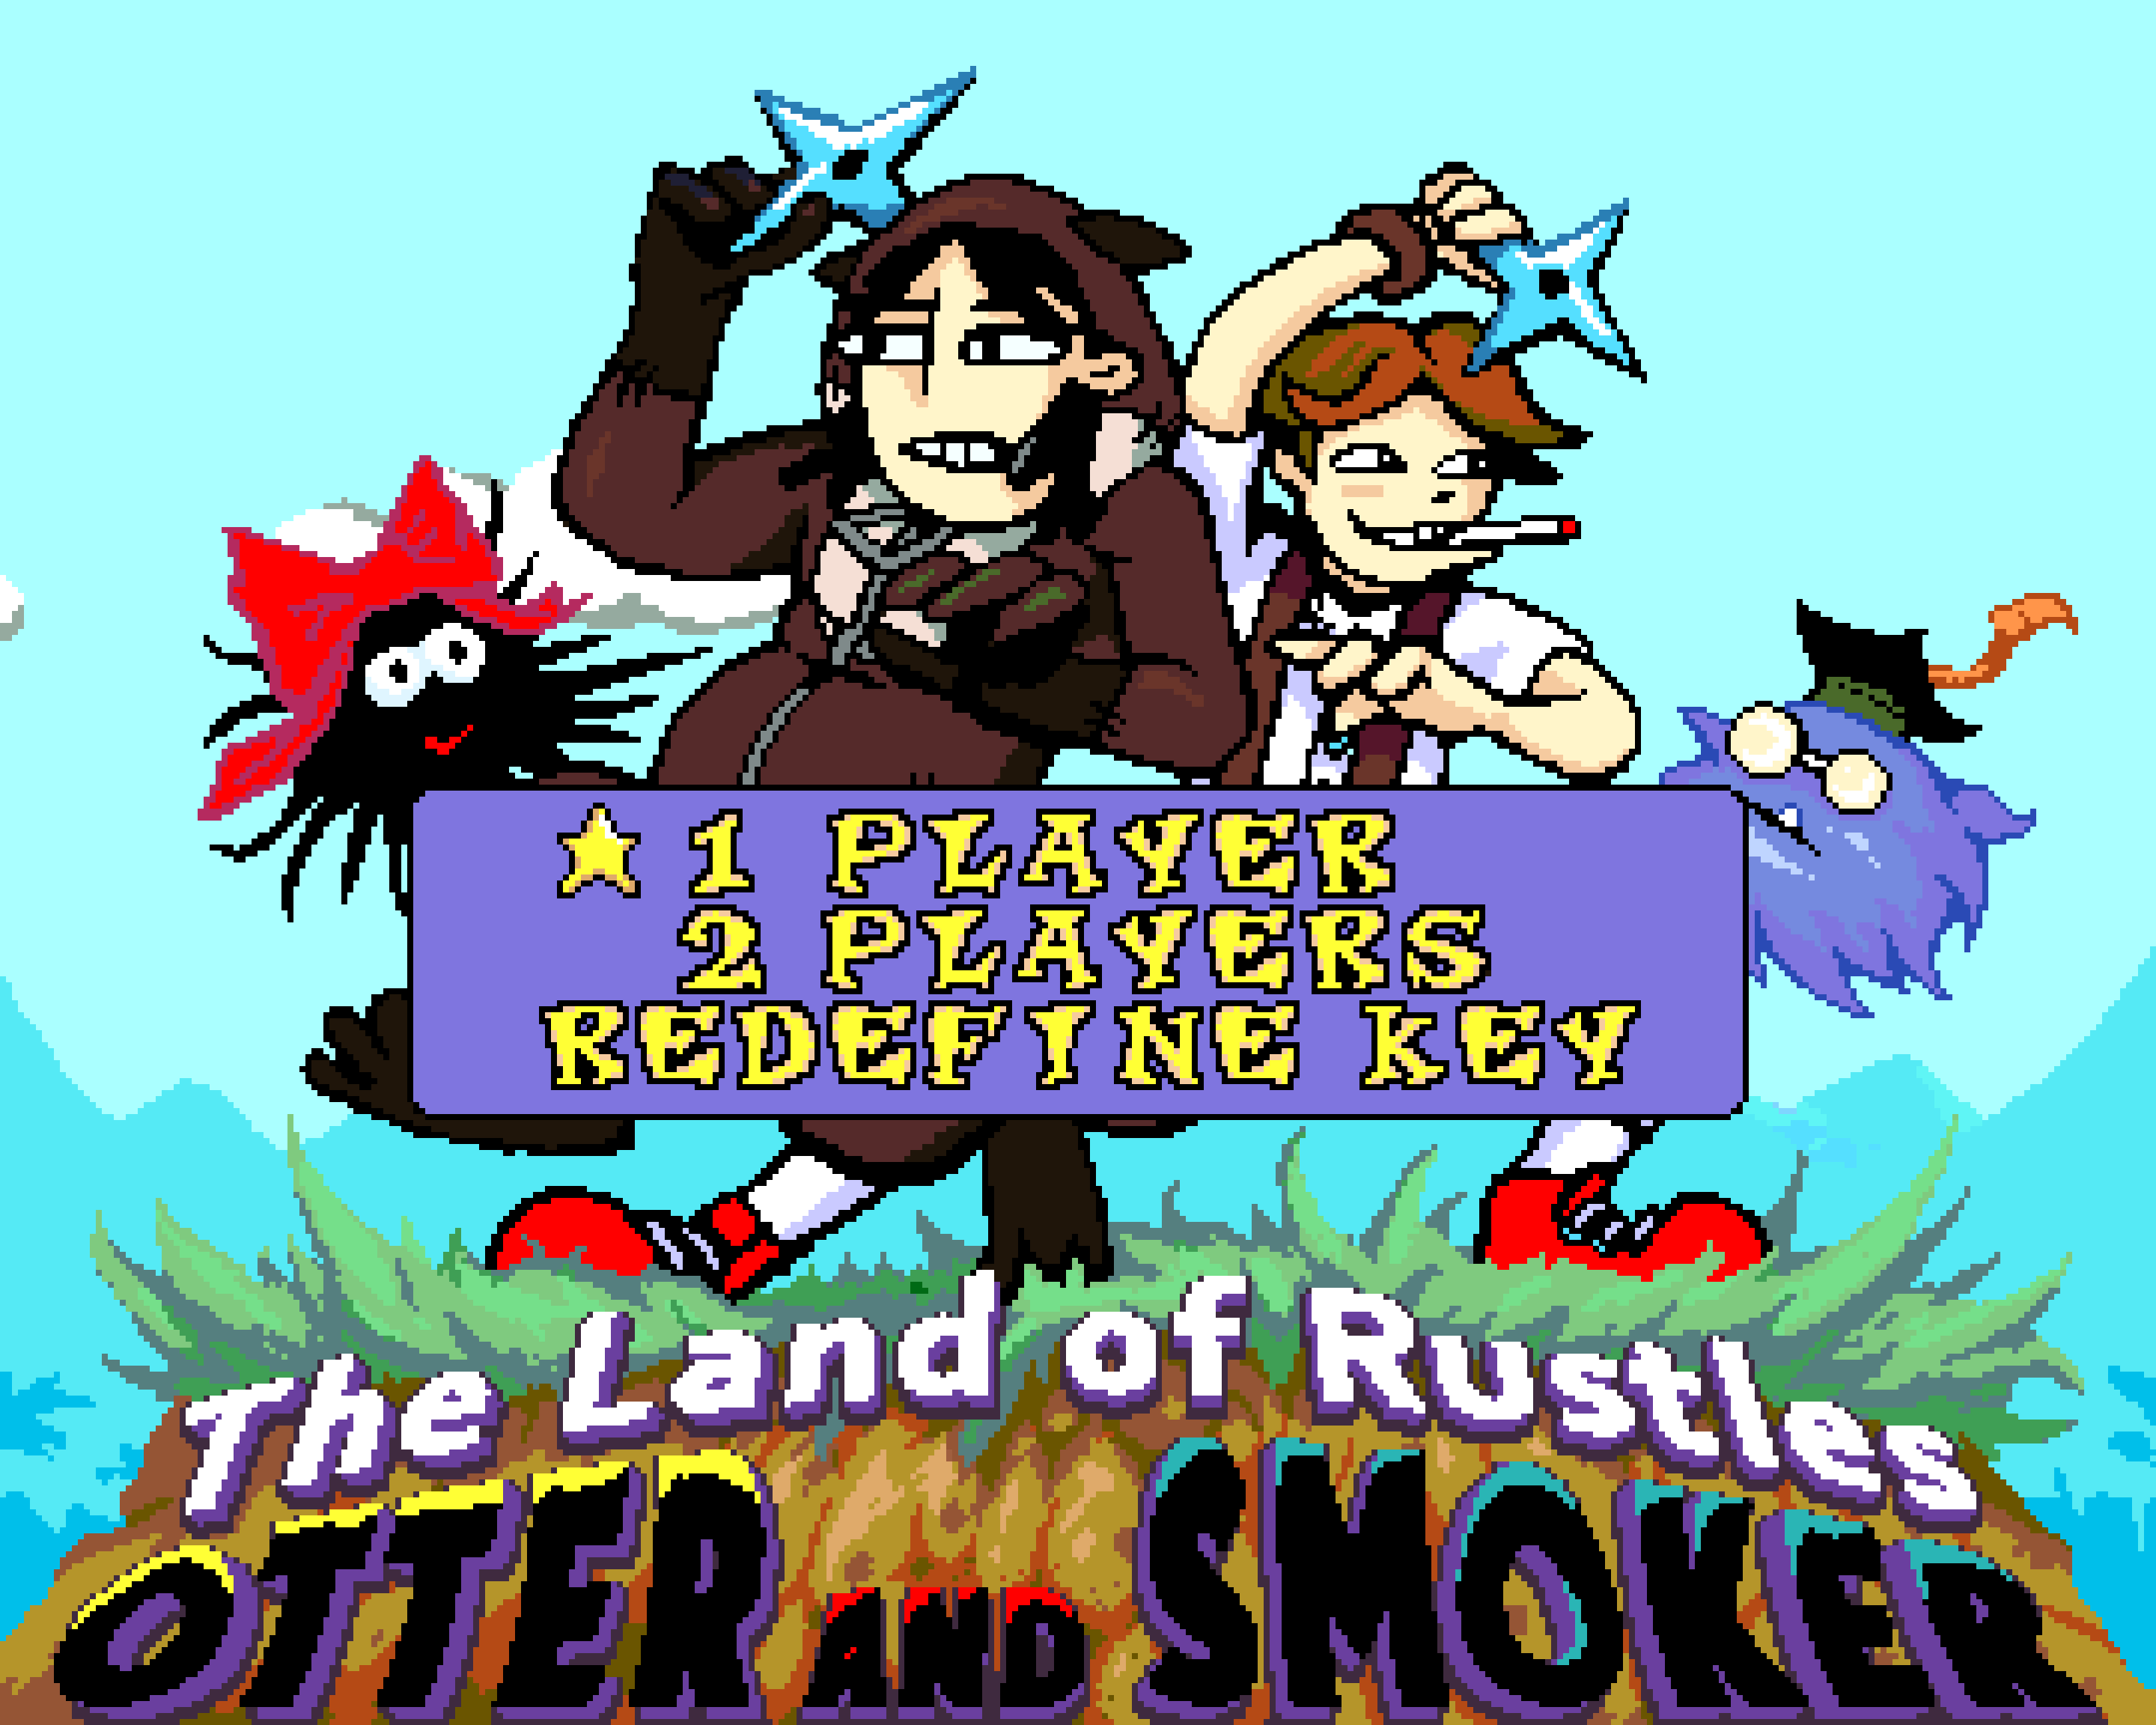 The Land of Rustles: Otter and Smoker menu